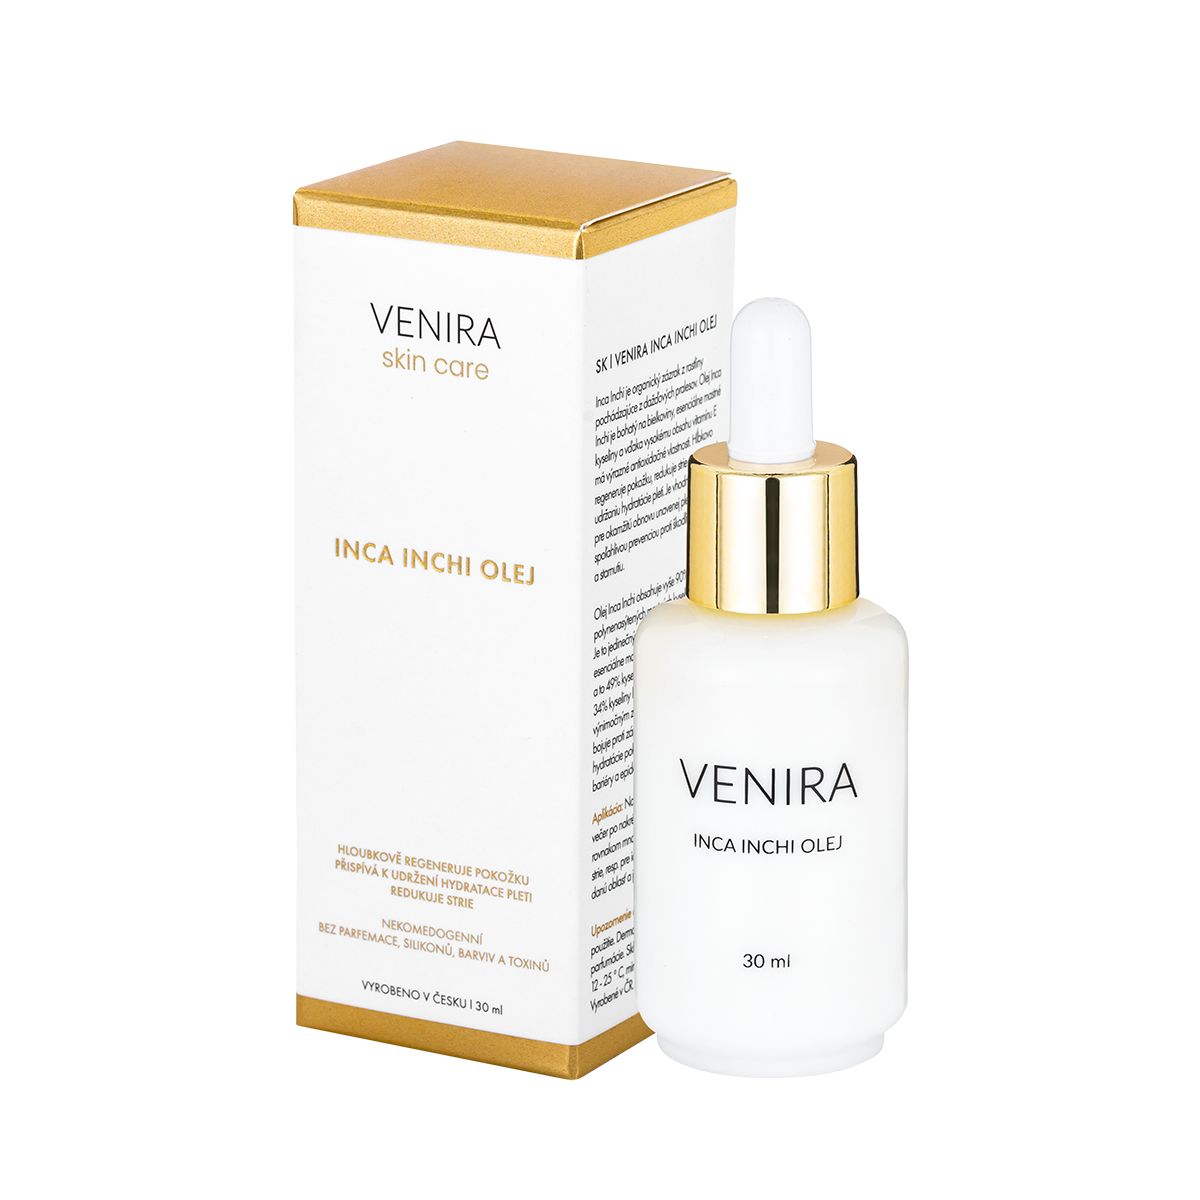 Venira Inca Inchi olej 30 ml Venira